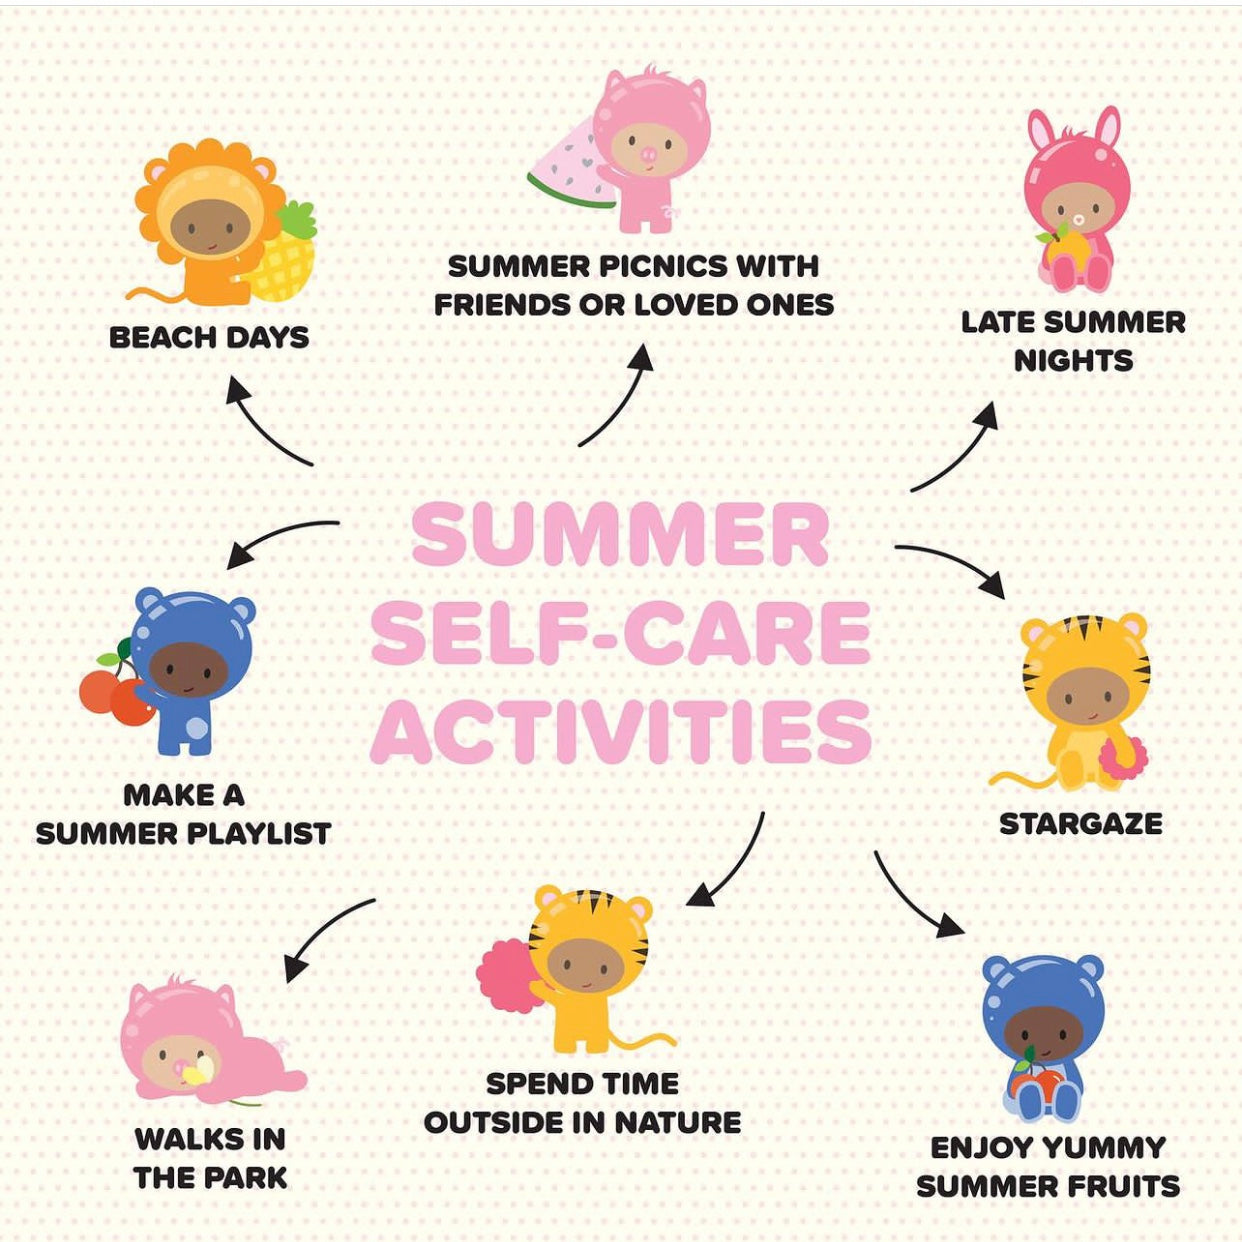 Summer self-care activities